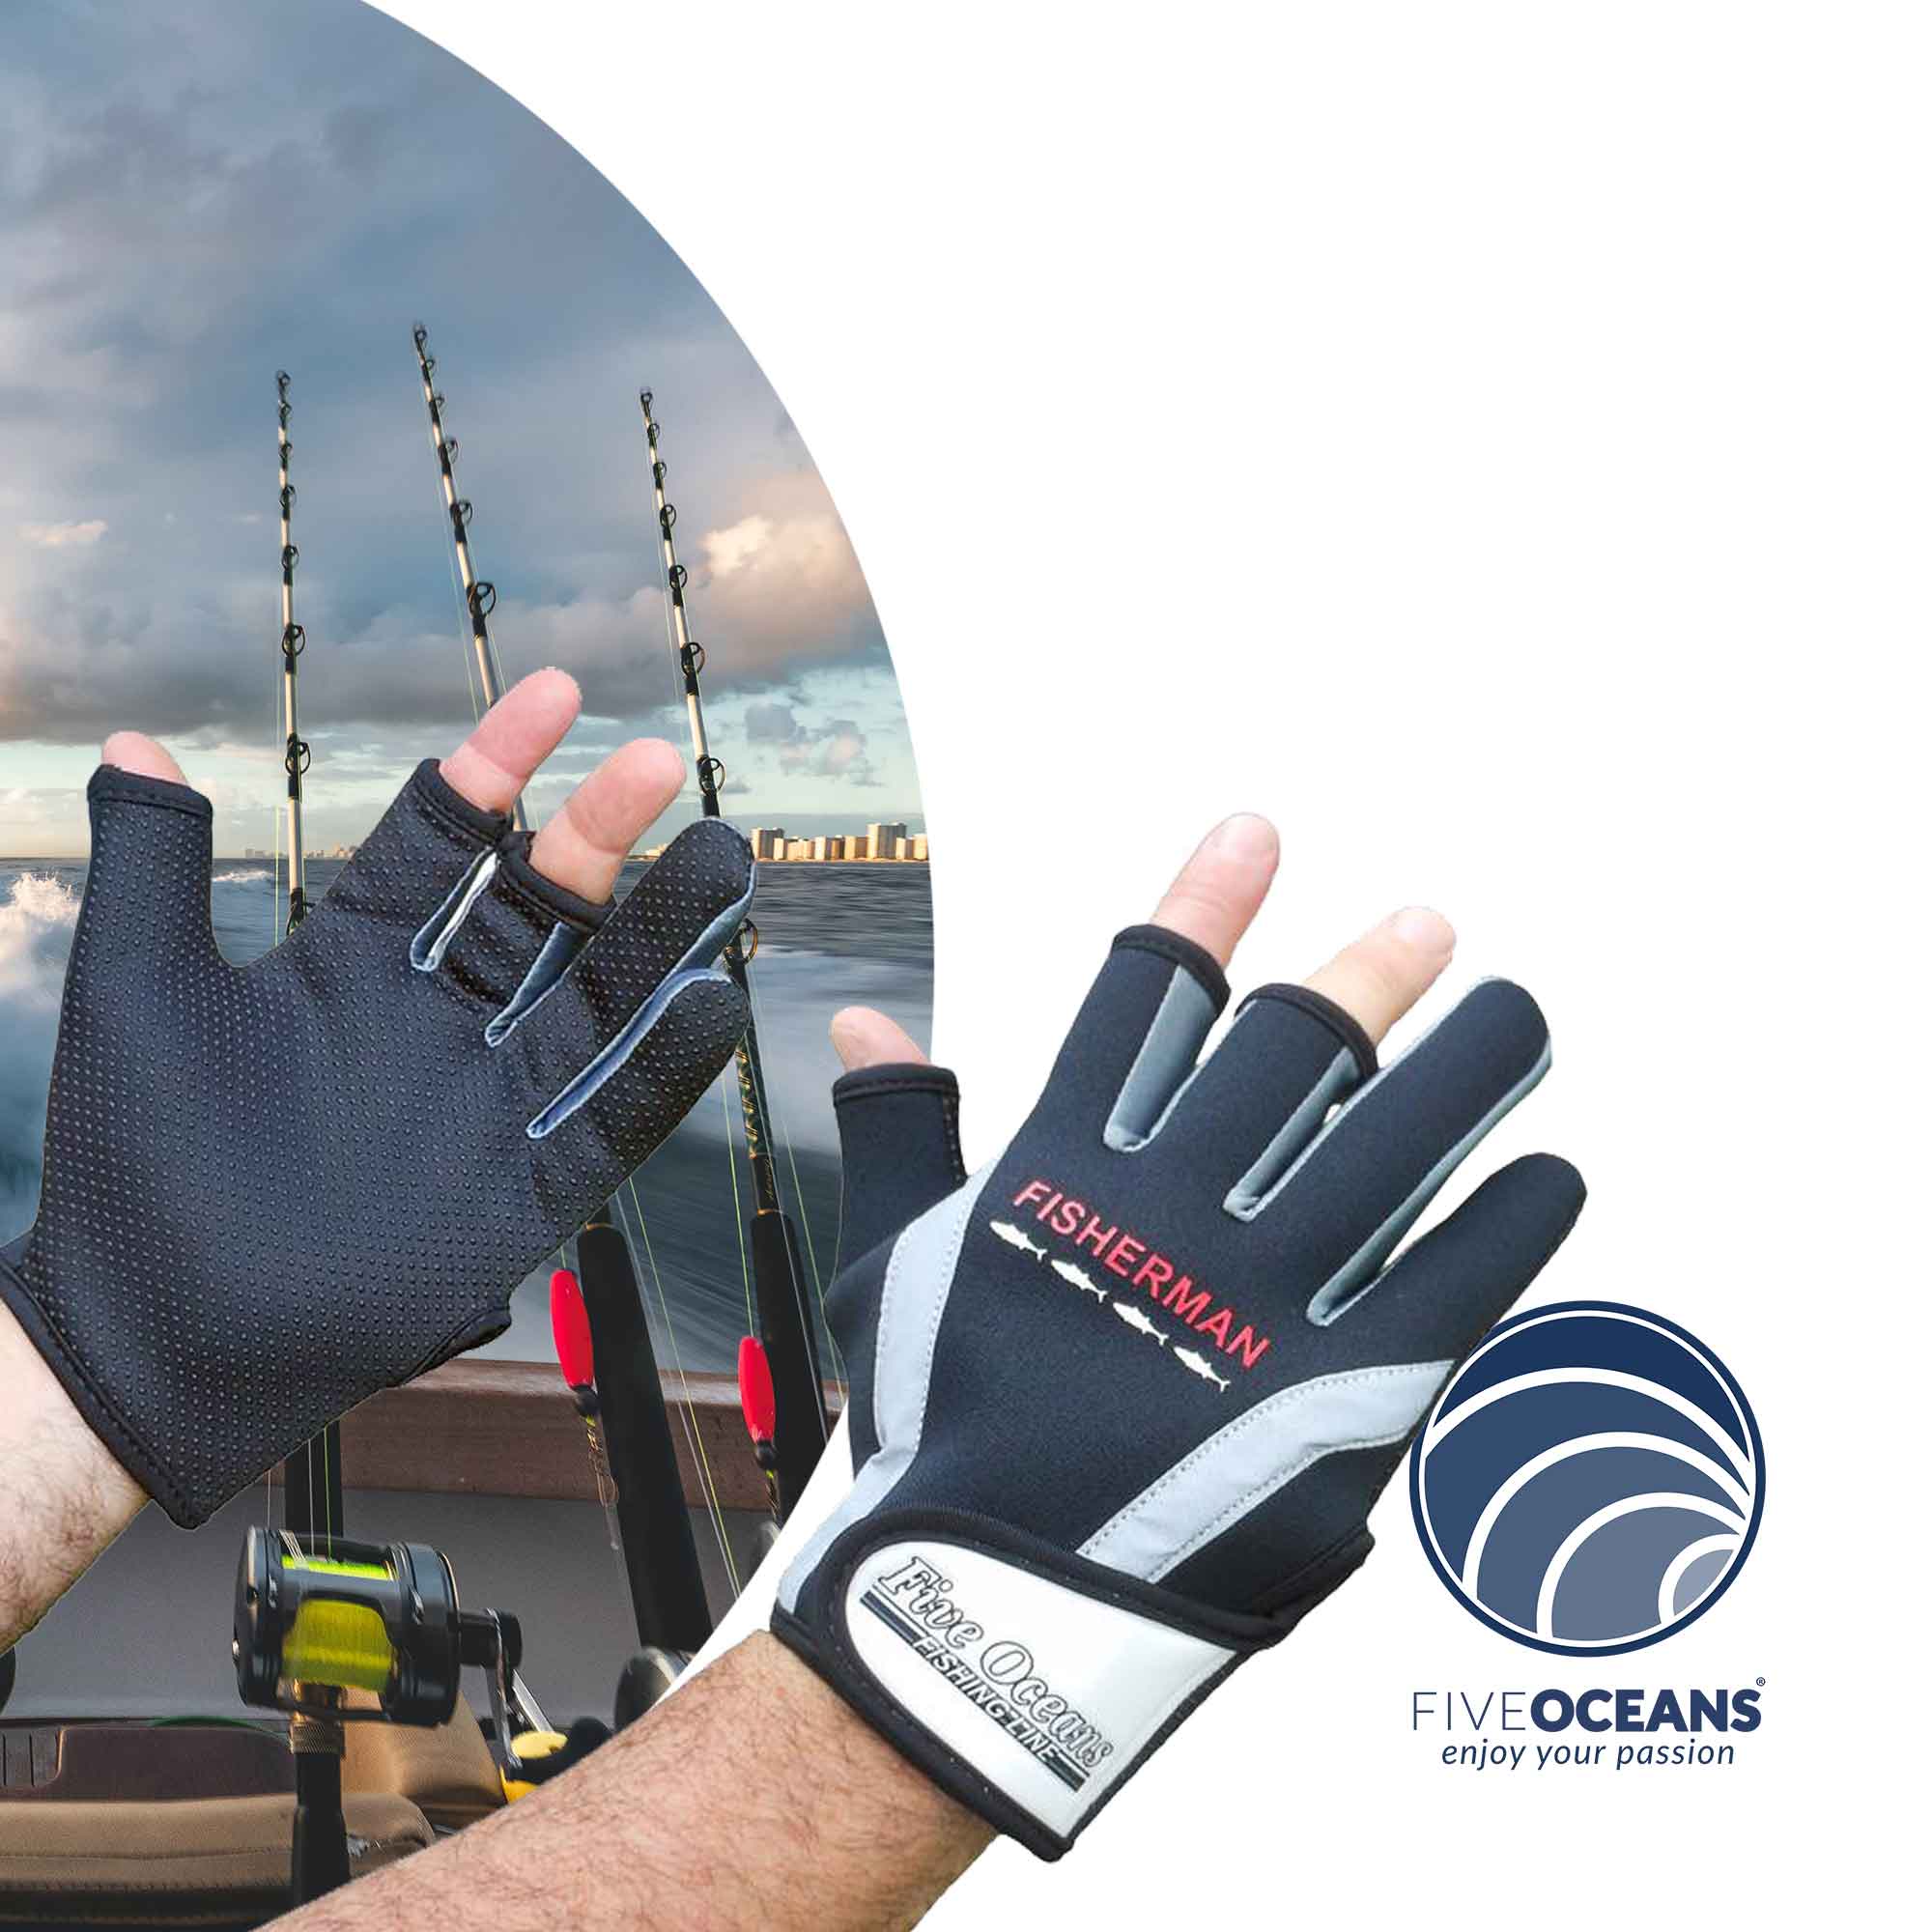 Five Oceans Fisherman Glove, Black, Size XL FO-3774